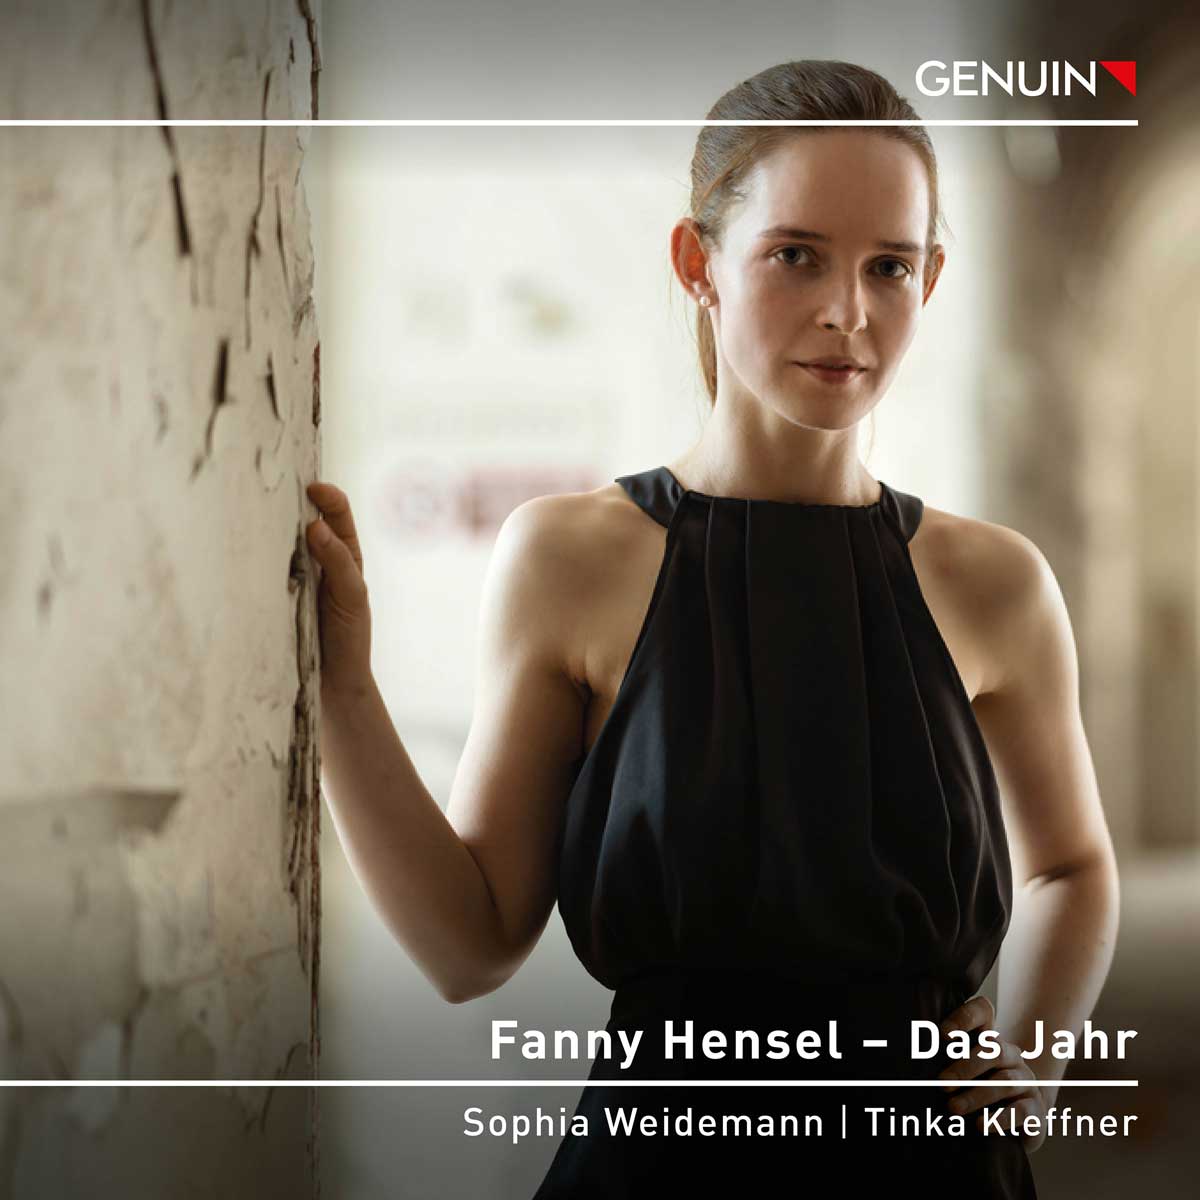 CD album cover 'Fanny Hensel - Das Jahr' (GEN 24872) with Sophia Weidemann, Tinka Kleffner